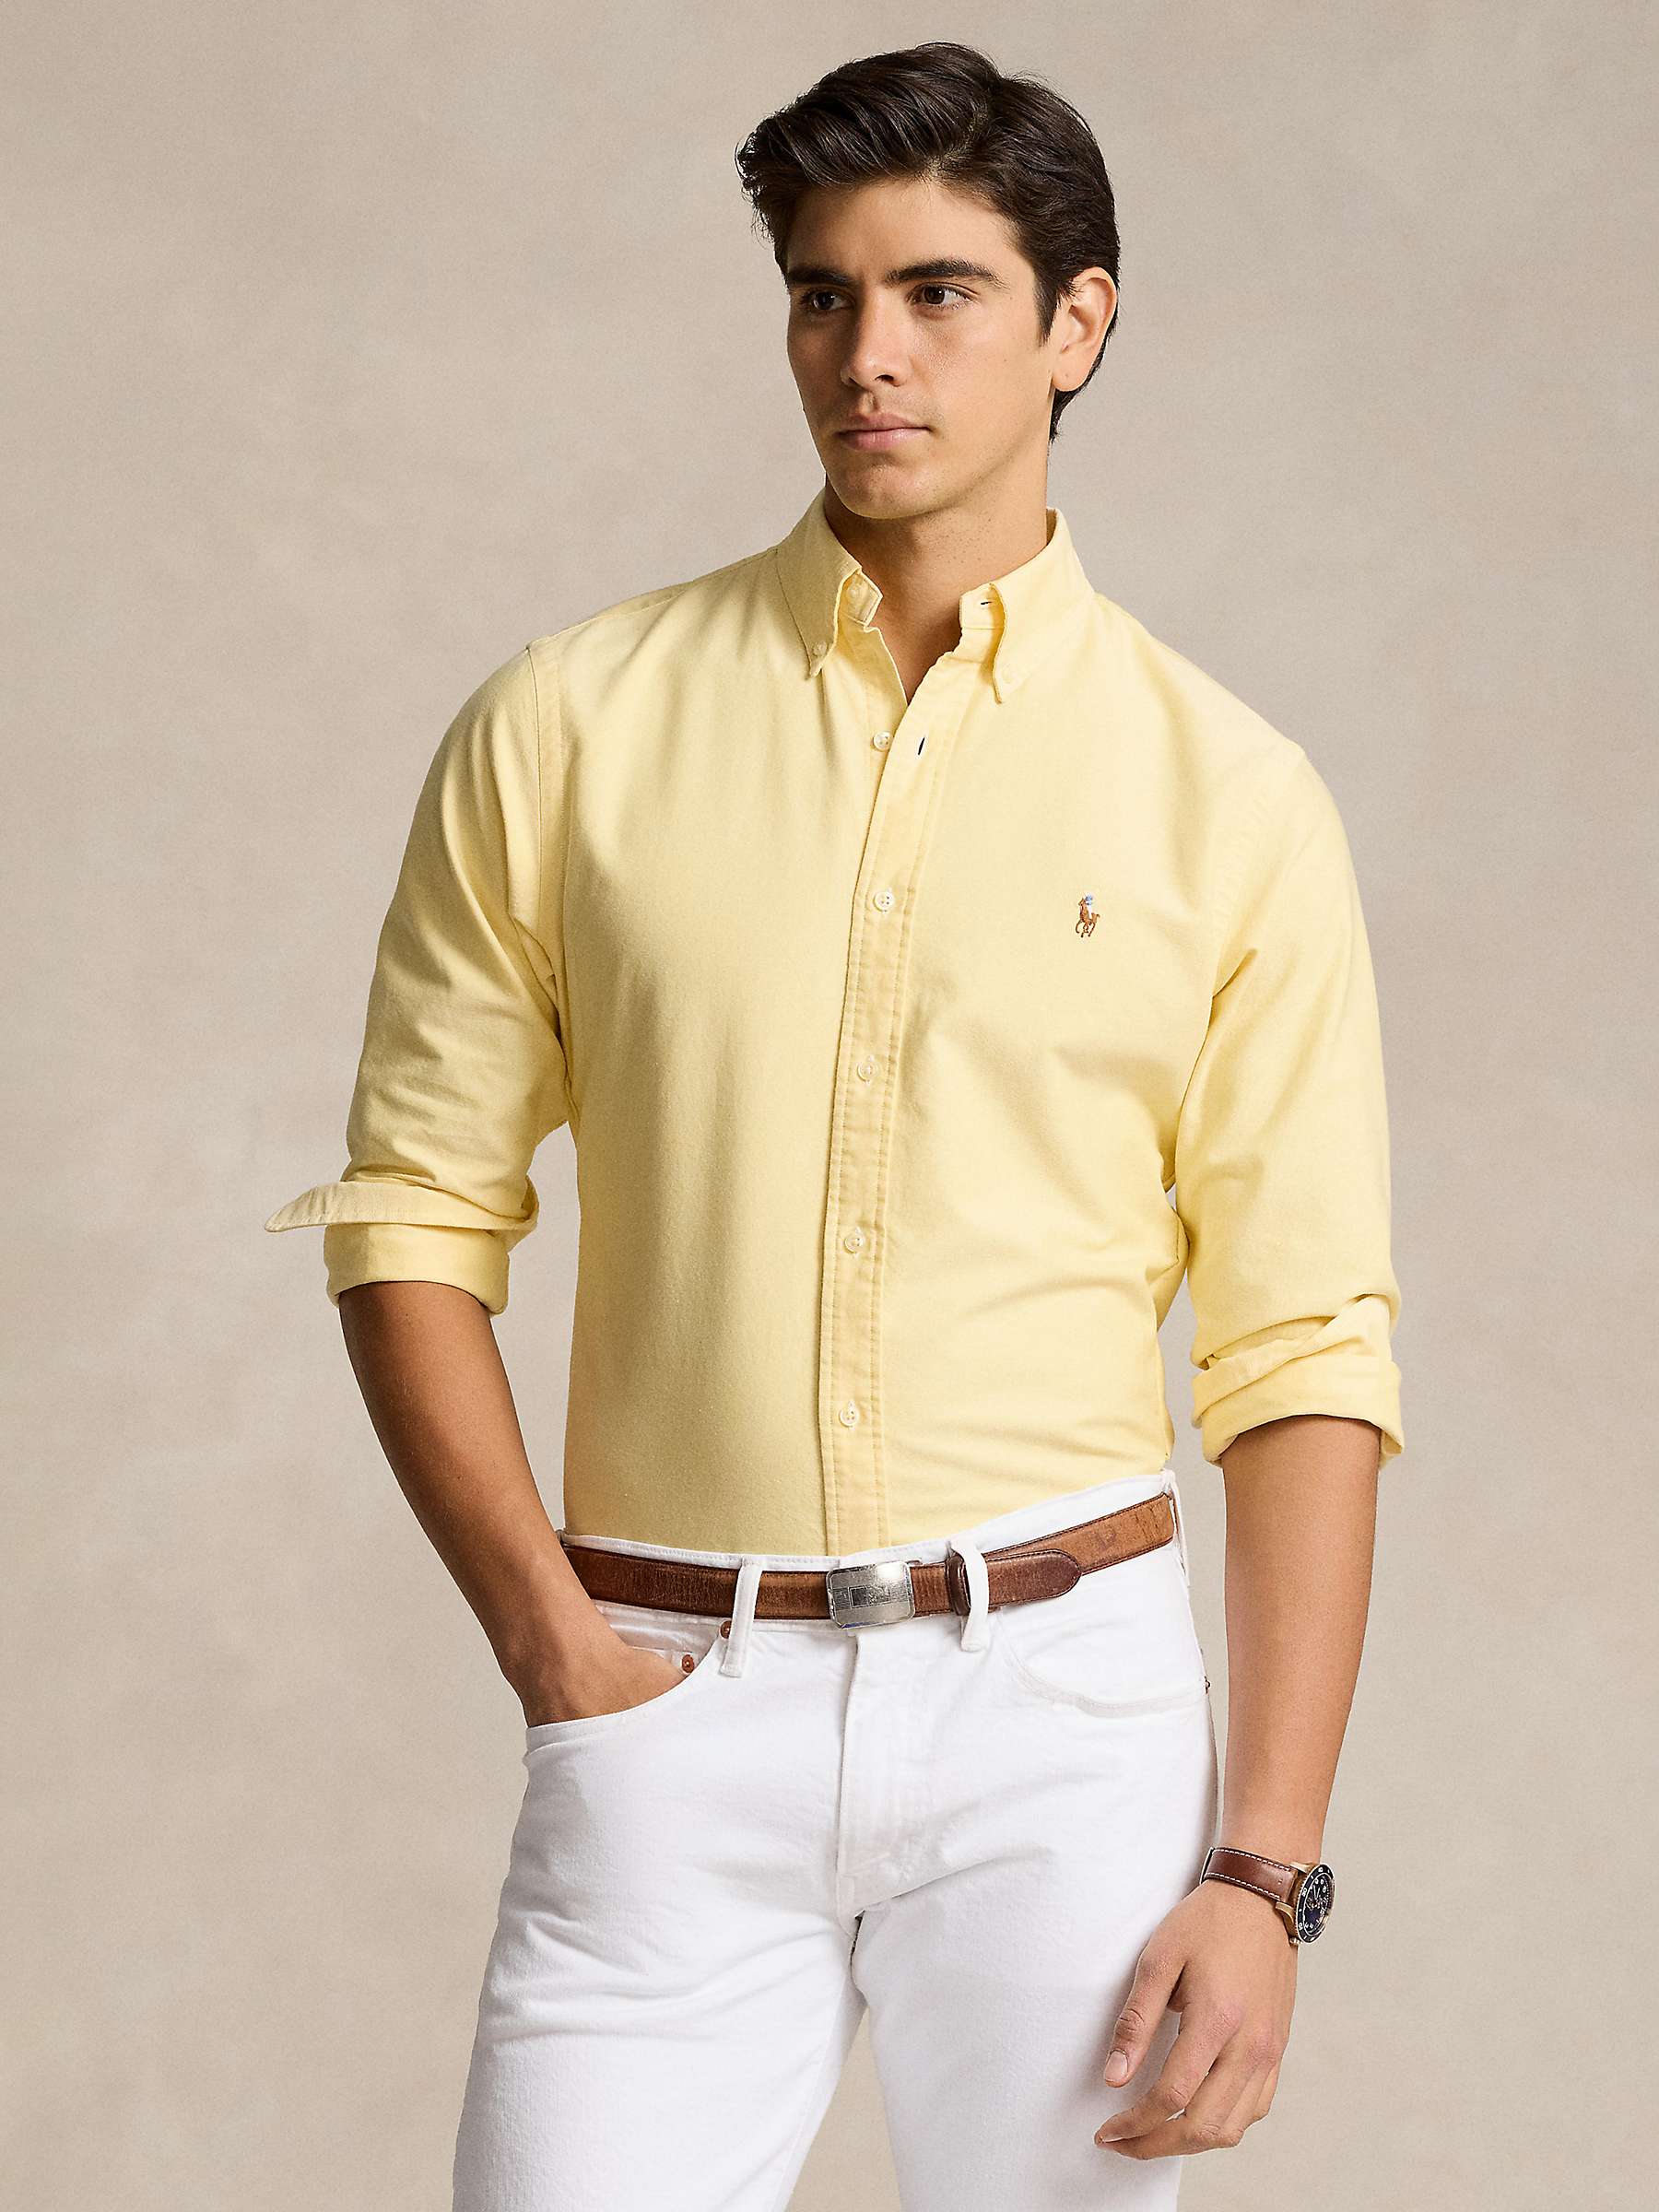 Buy Polo Ralph Lauren Long Sleeve Custom Fit Oxford Shirt Online at johnlewis.com